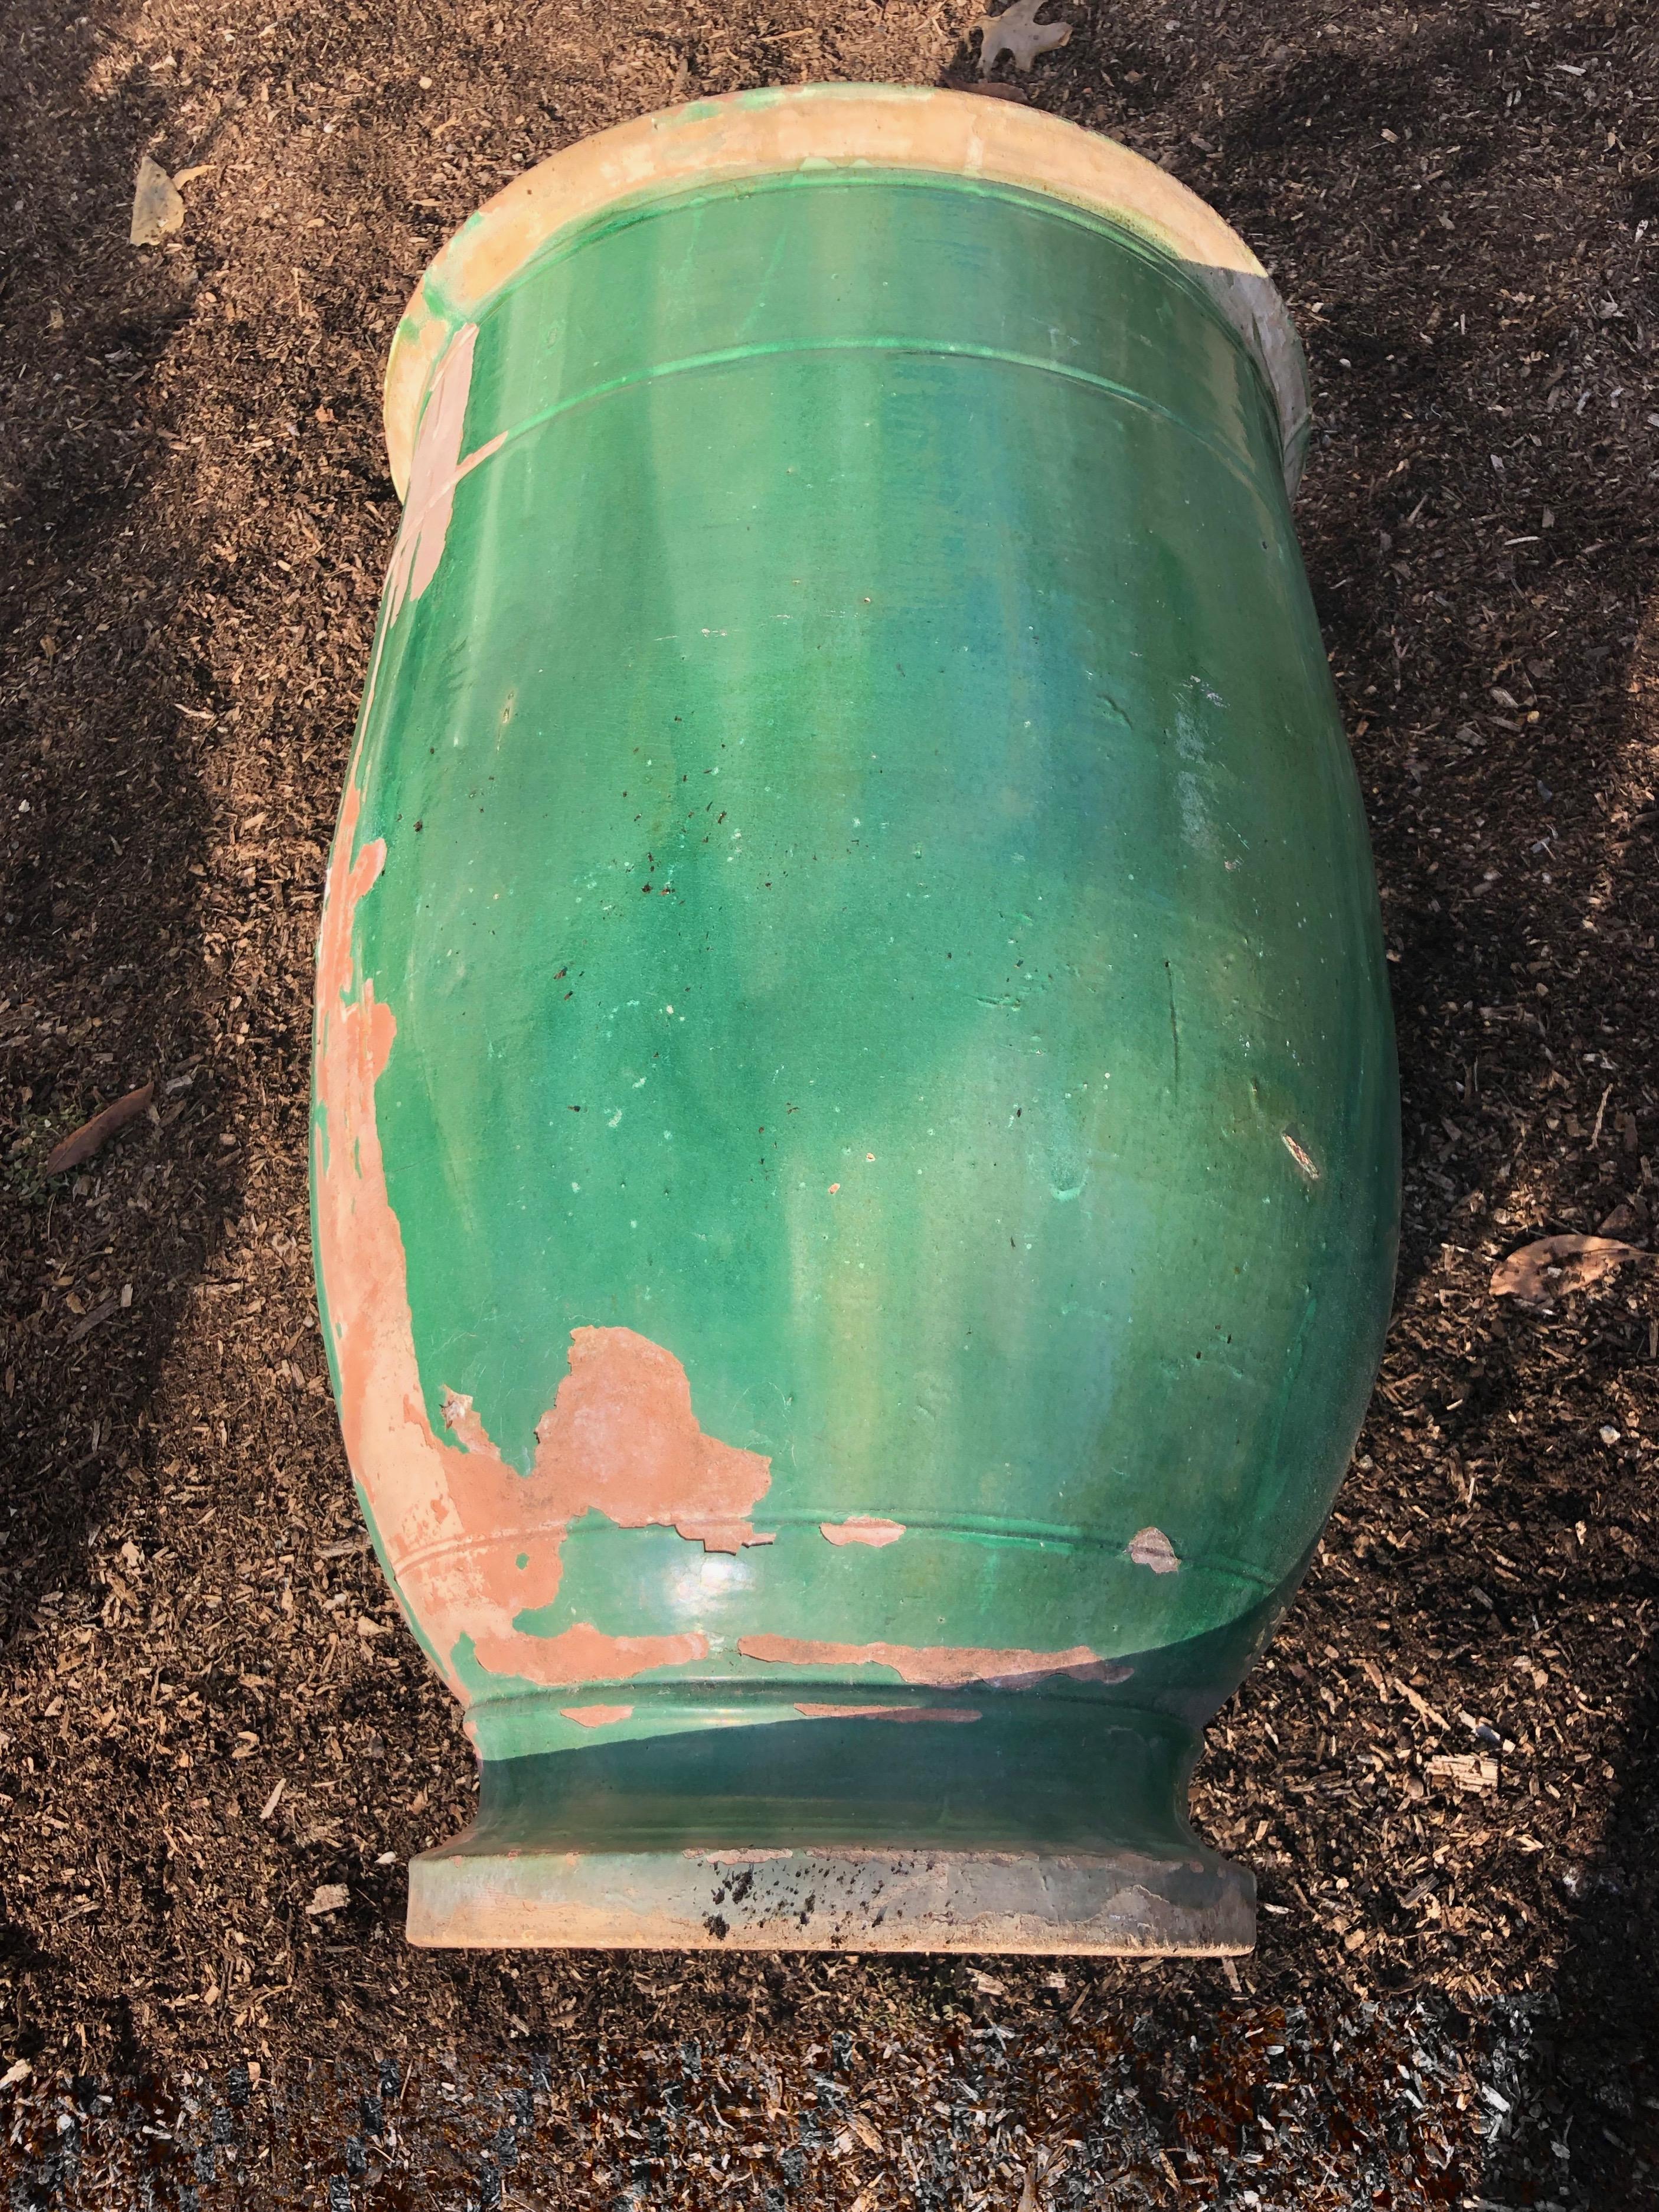 French 19th Century Green-Glazed Terracotta Pot from Apt 5